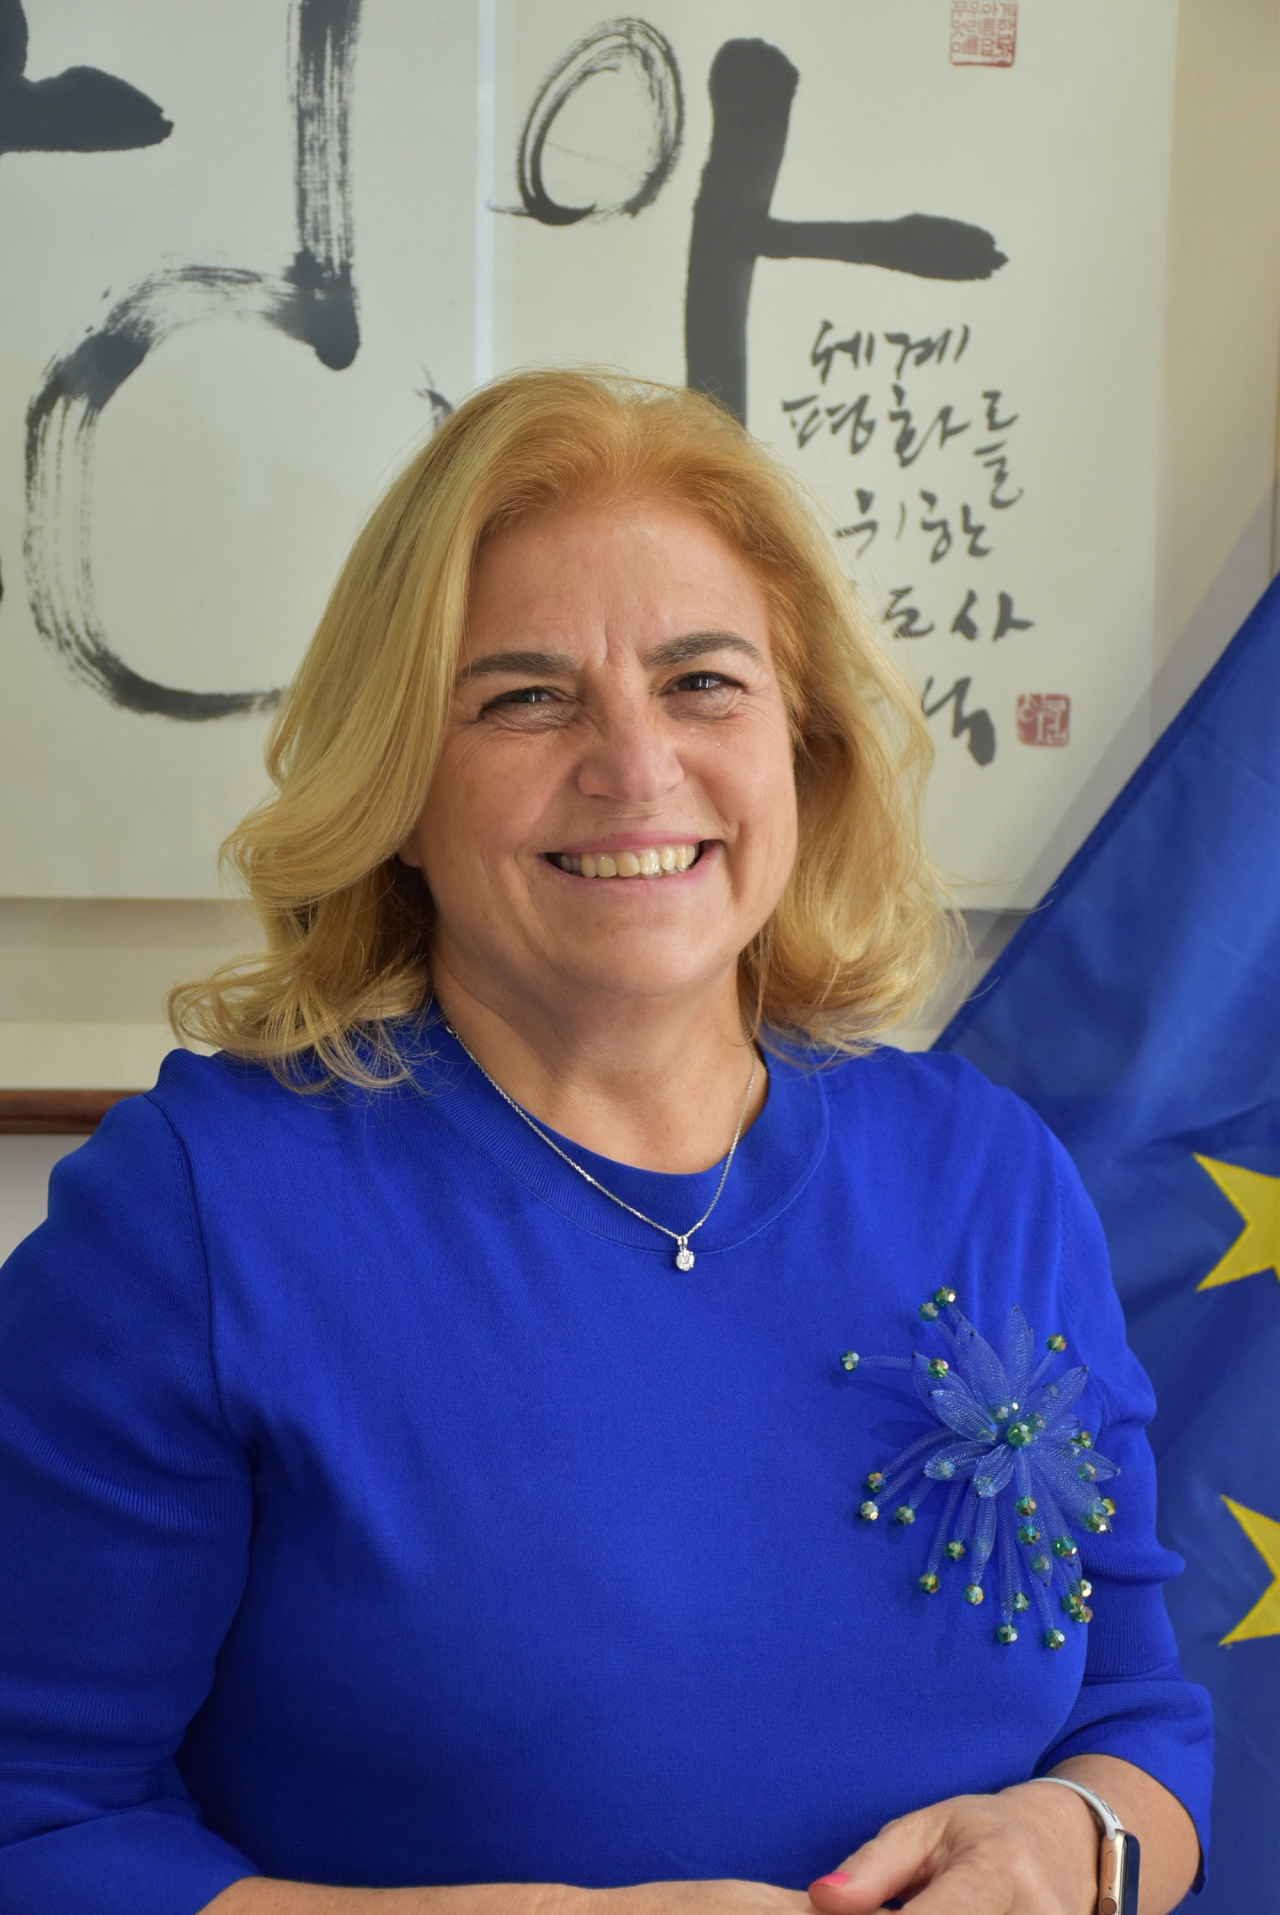 EU Ambassador Maria Castillo Fernandez (Courtesy of Delegation of European Union in Korea)